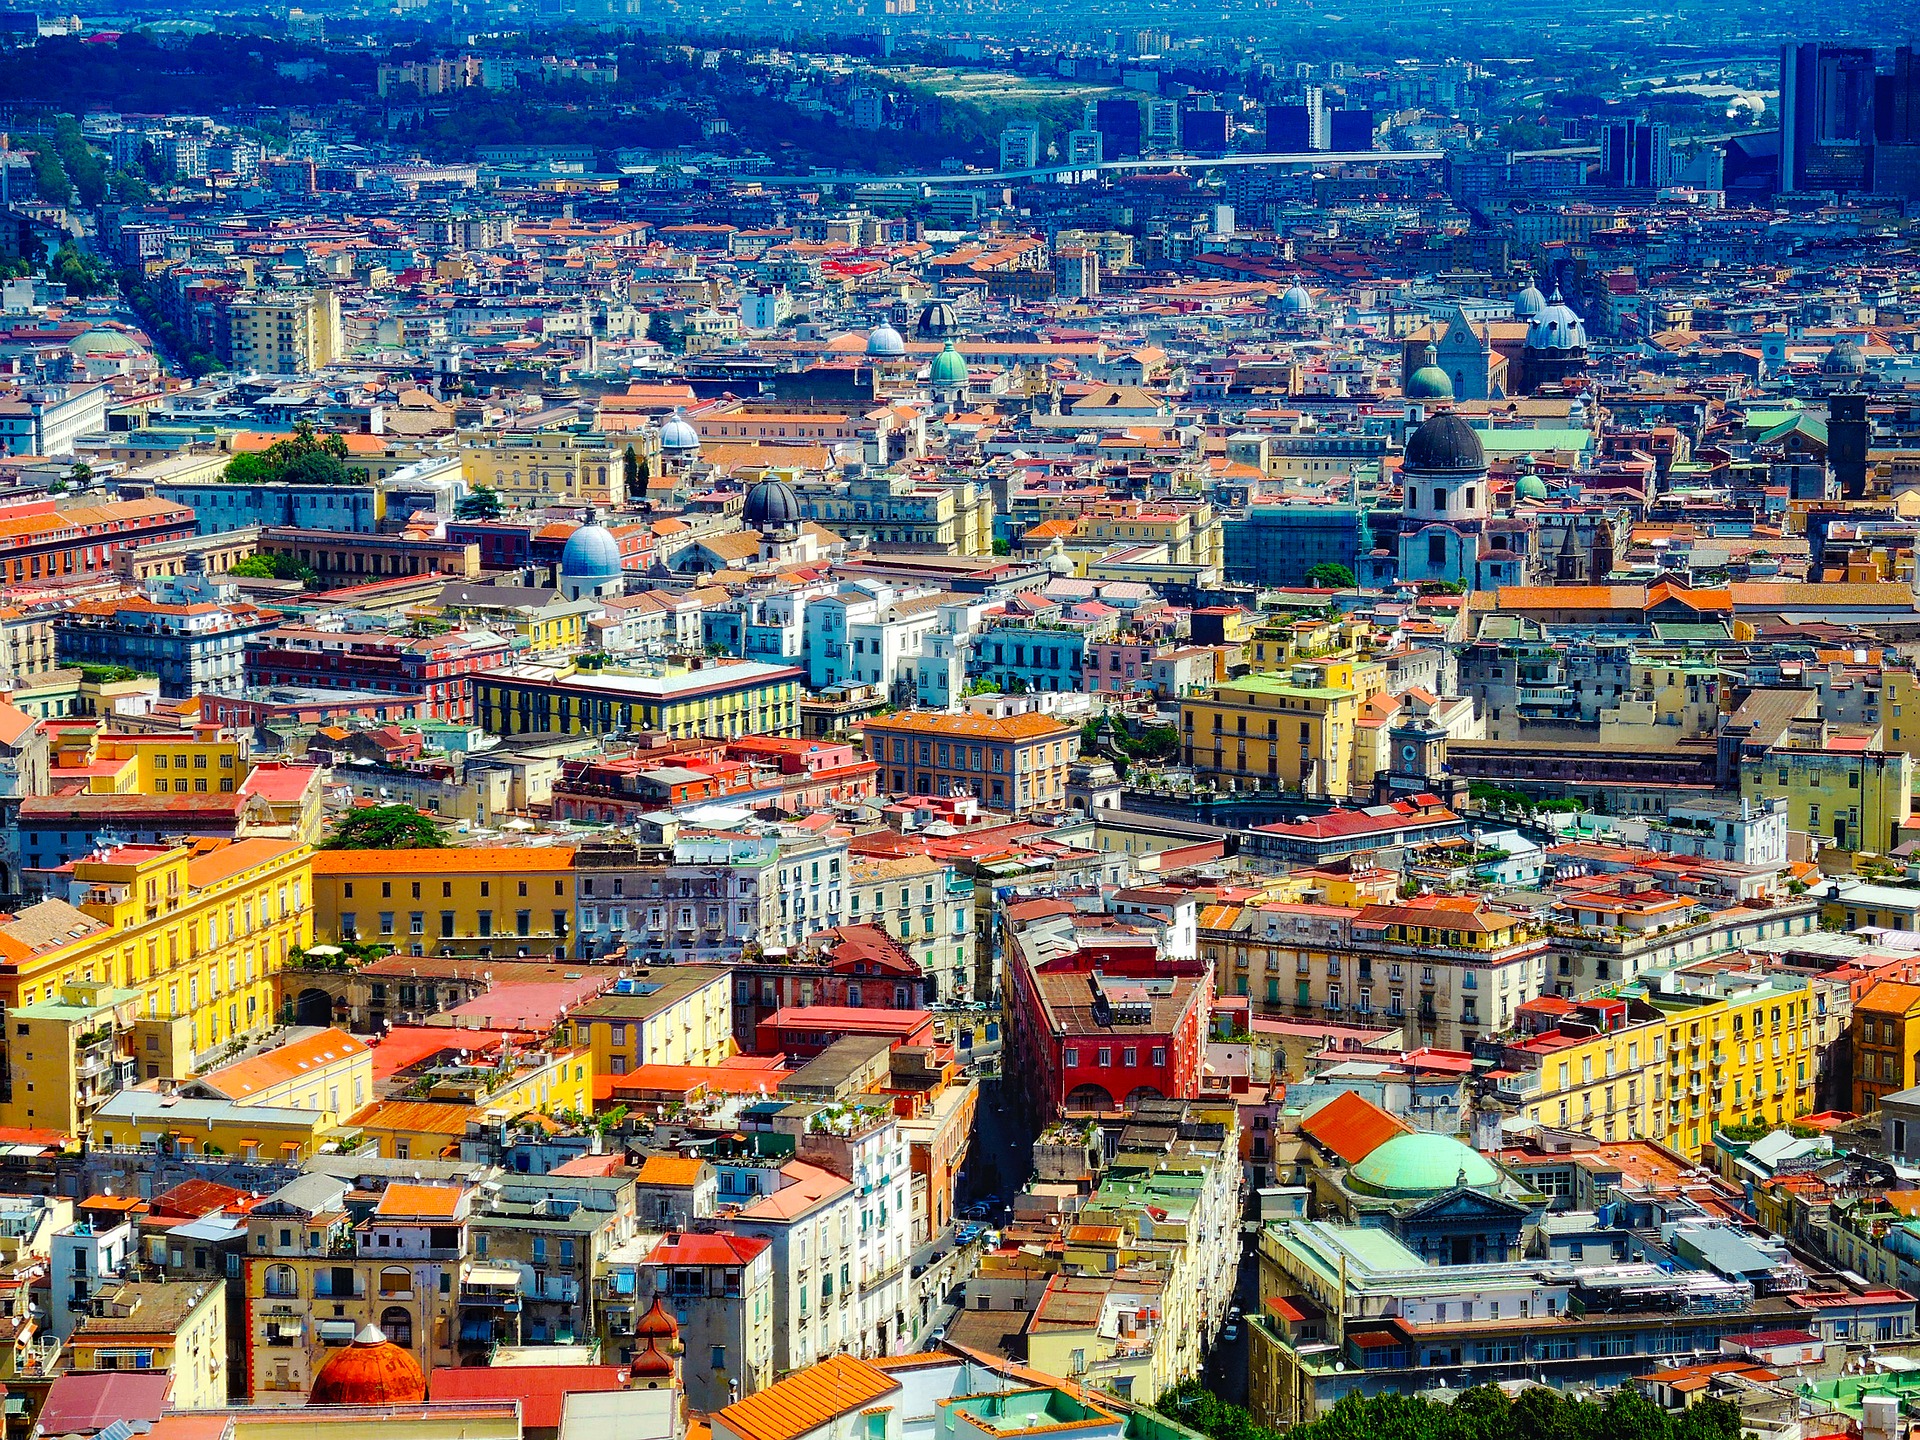 Naples - @tpsdave - Pixabay